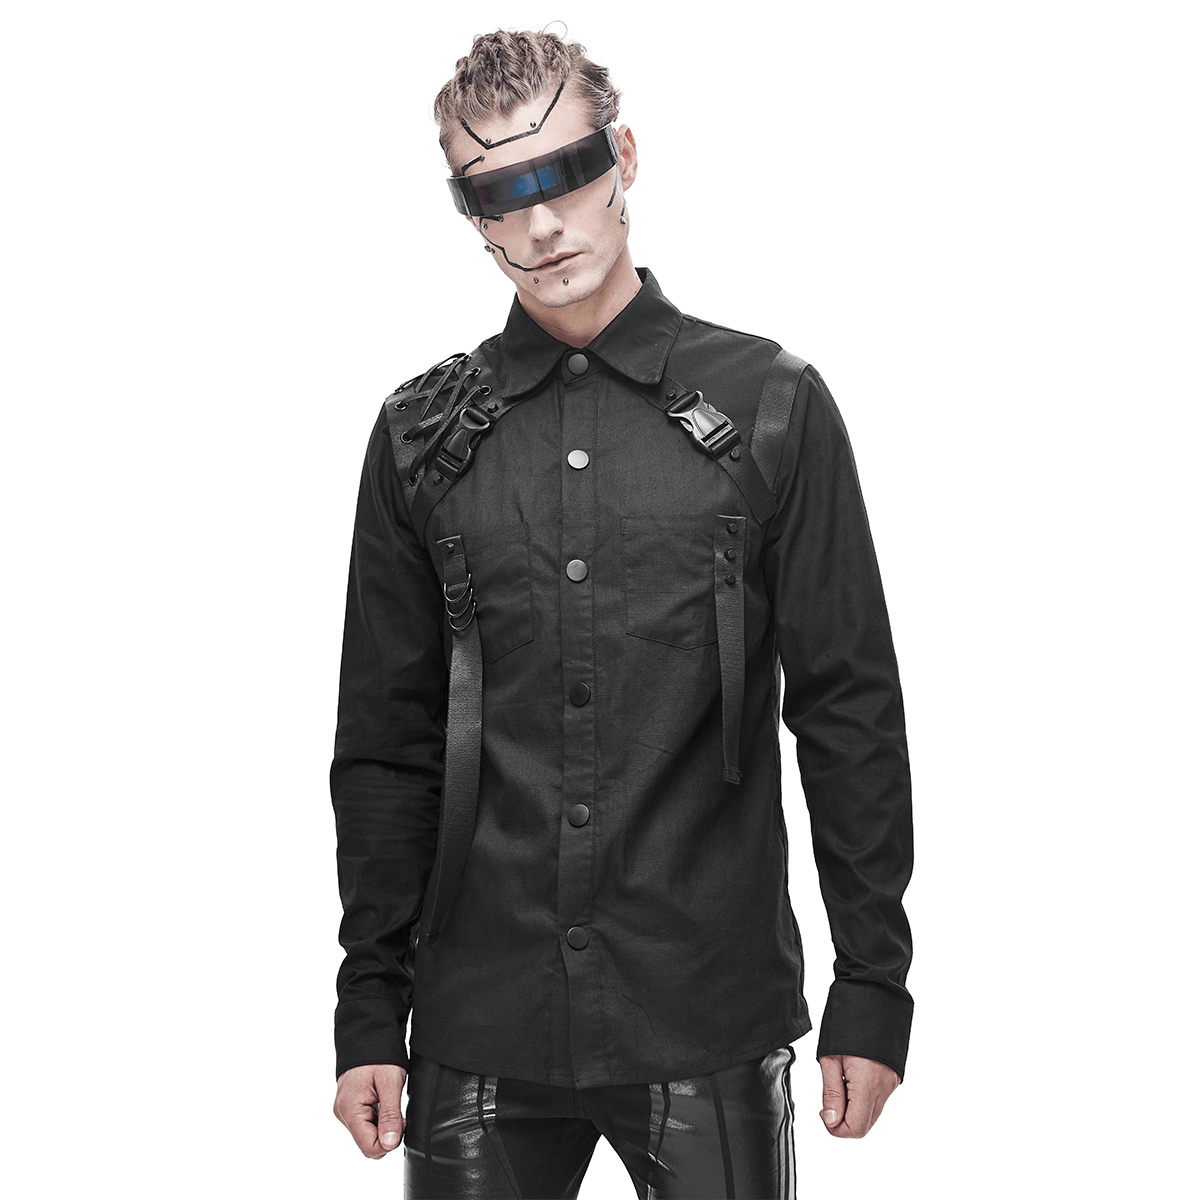 Cyberpunk Style Mens Long Sleeve Shirt / Comfortable Black Shirt with Straps - HARD'N'HEAVY